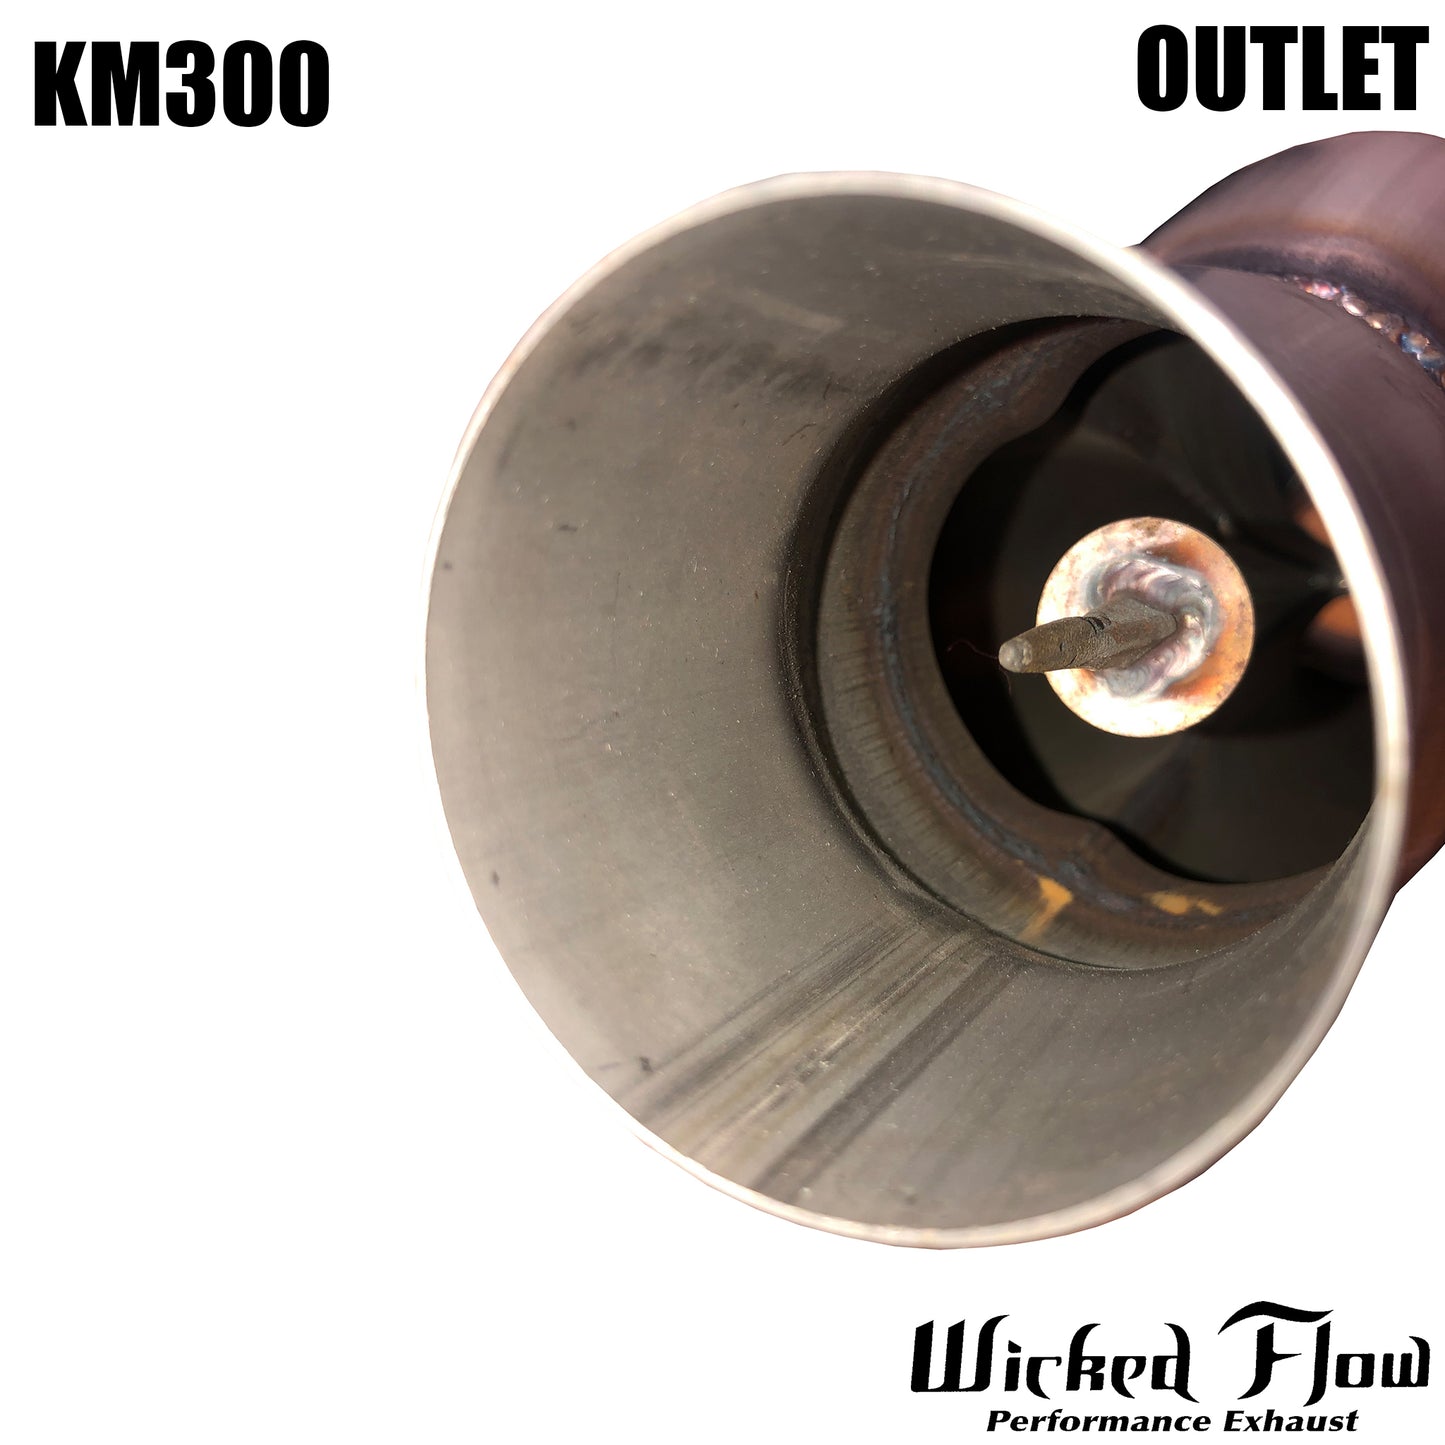 KM300 - Kamikaze Muffler 3" Inlet/Outlet - DIRECTIONAL